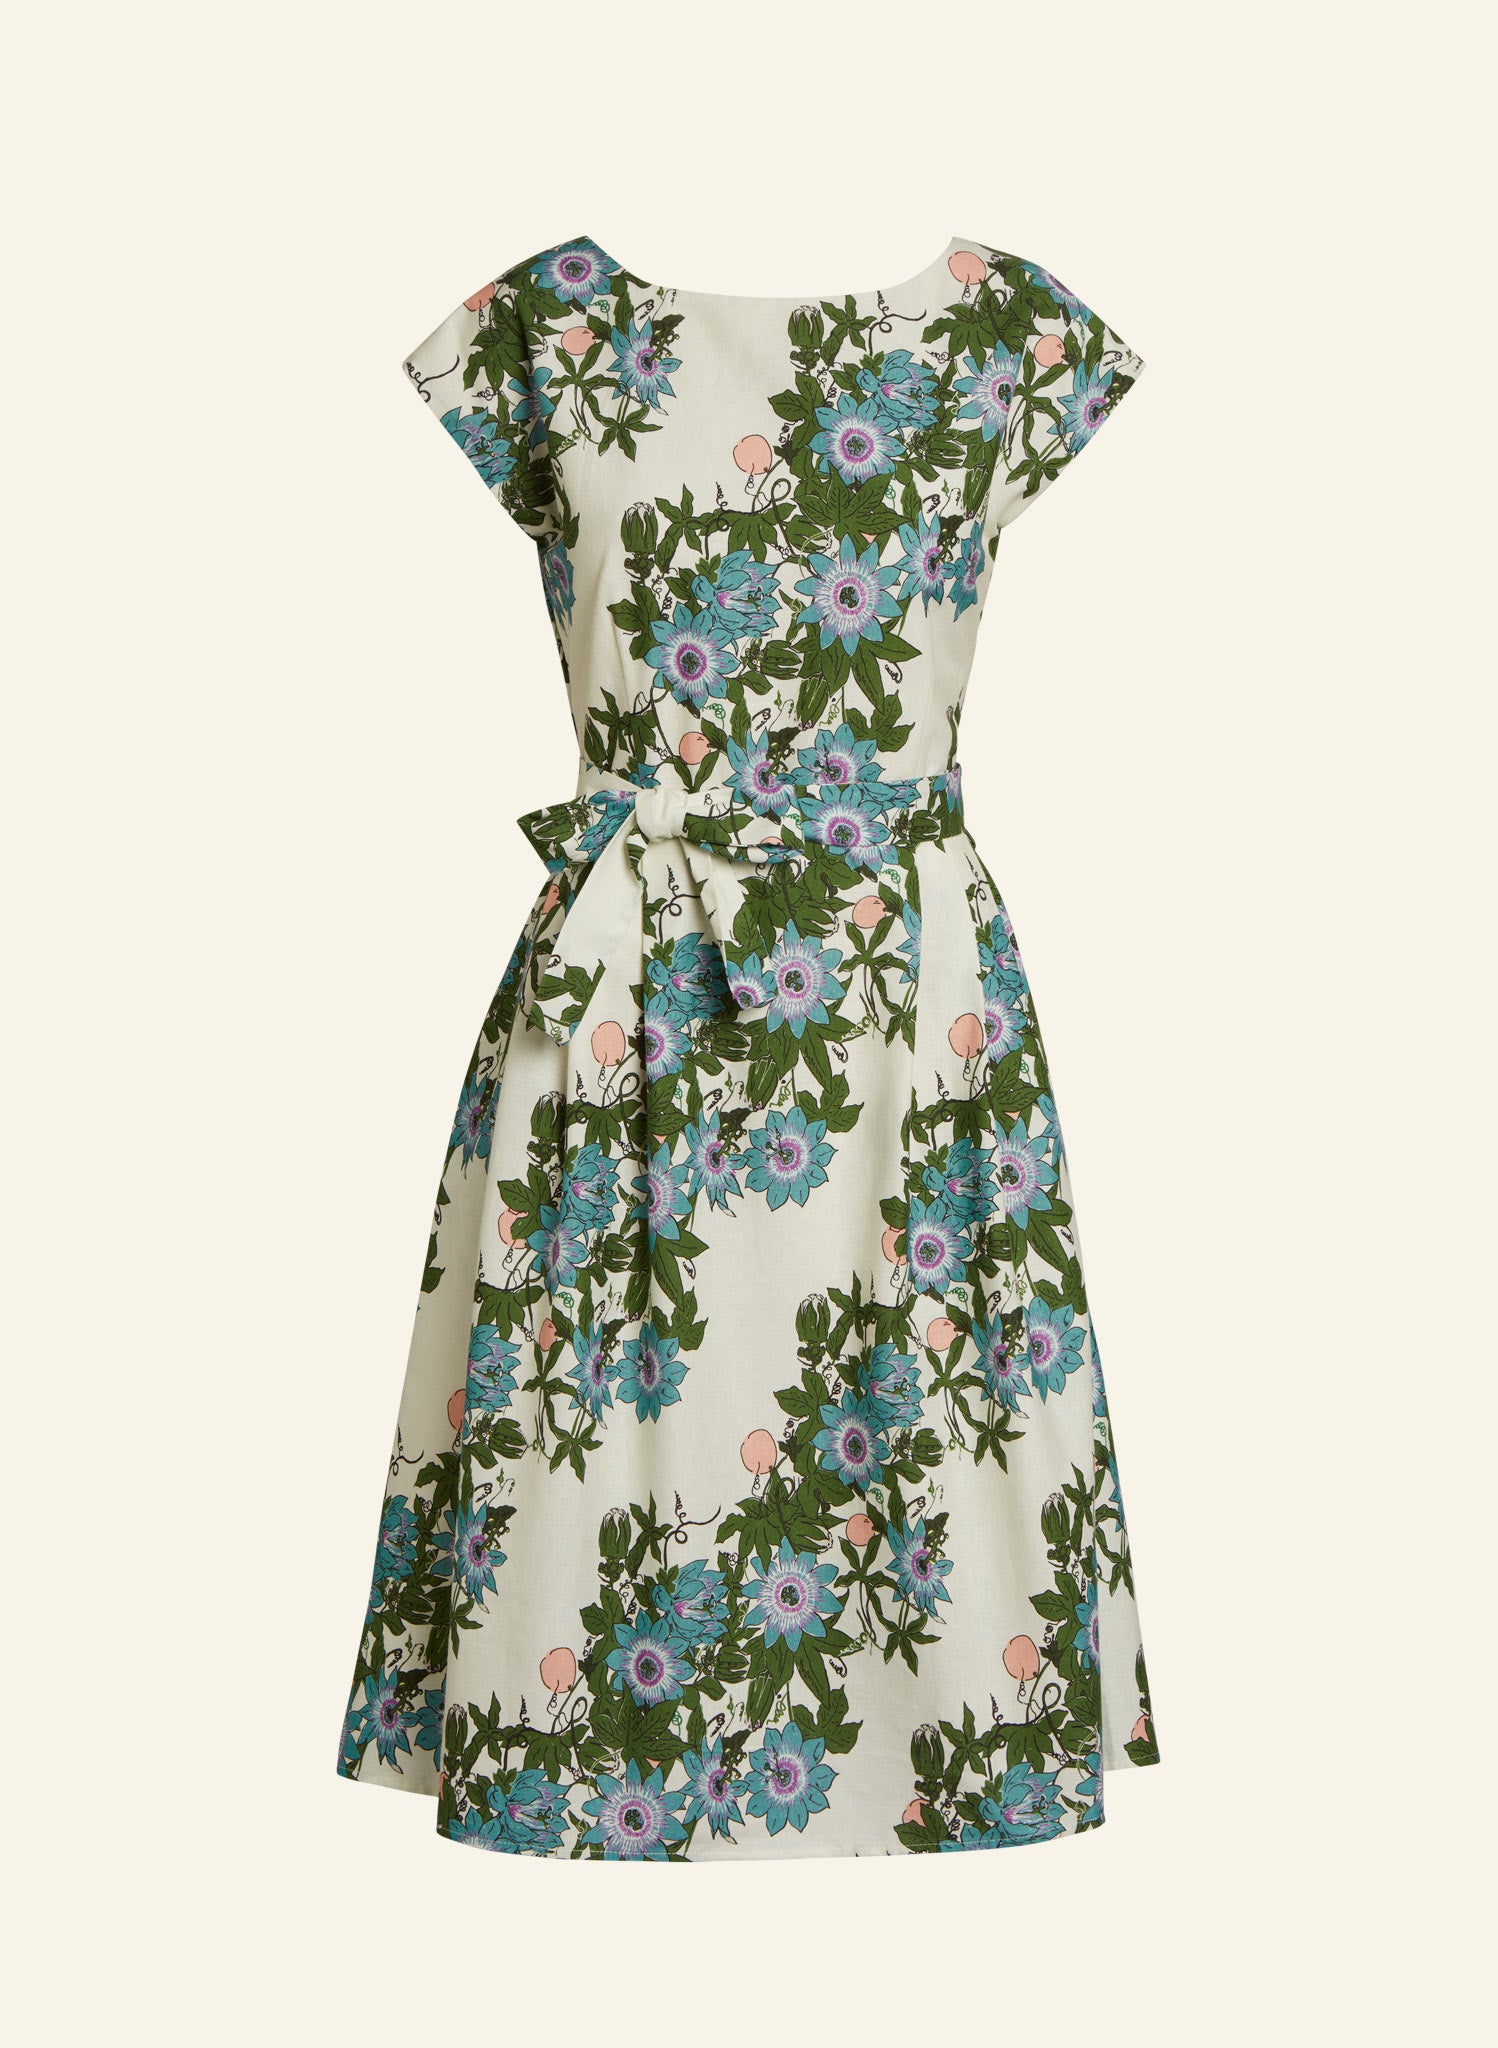 Beatrice Cap - Ivory Passionflower Dress